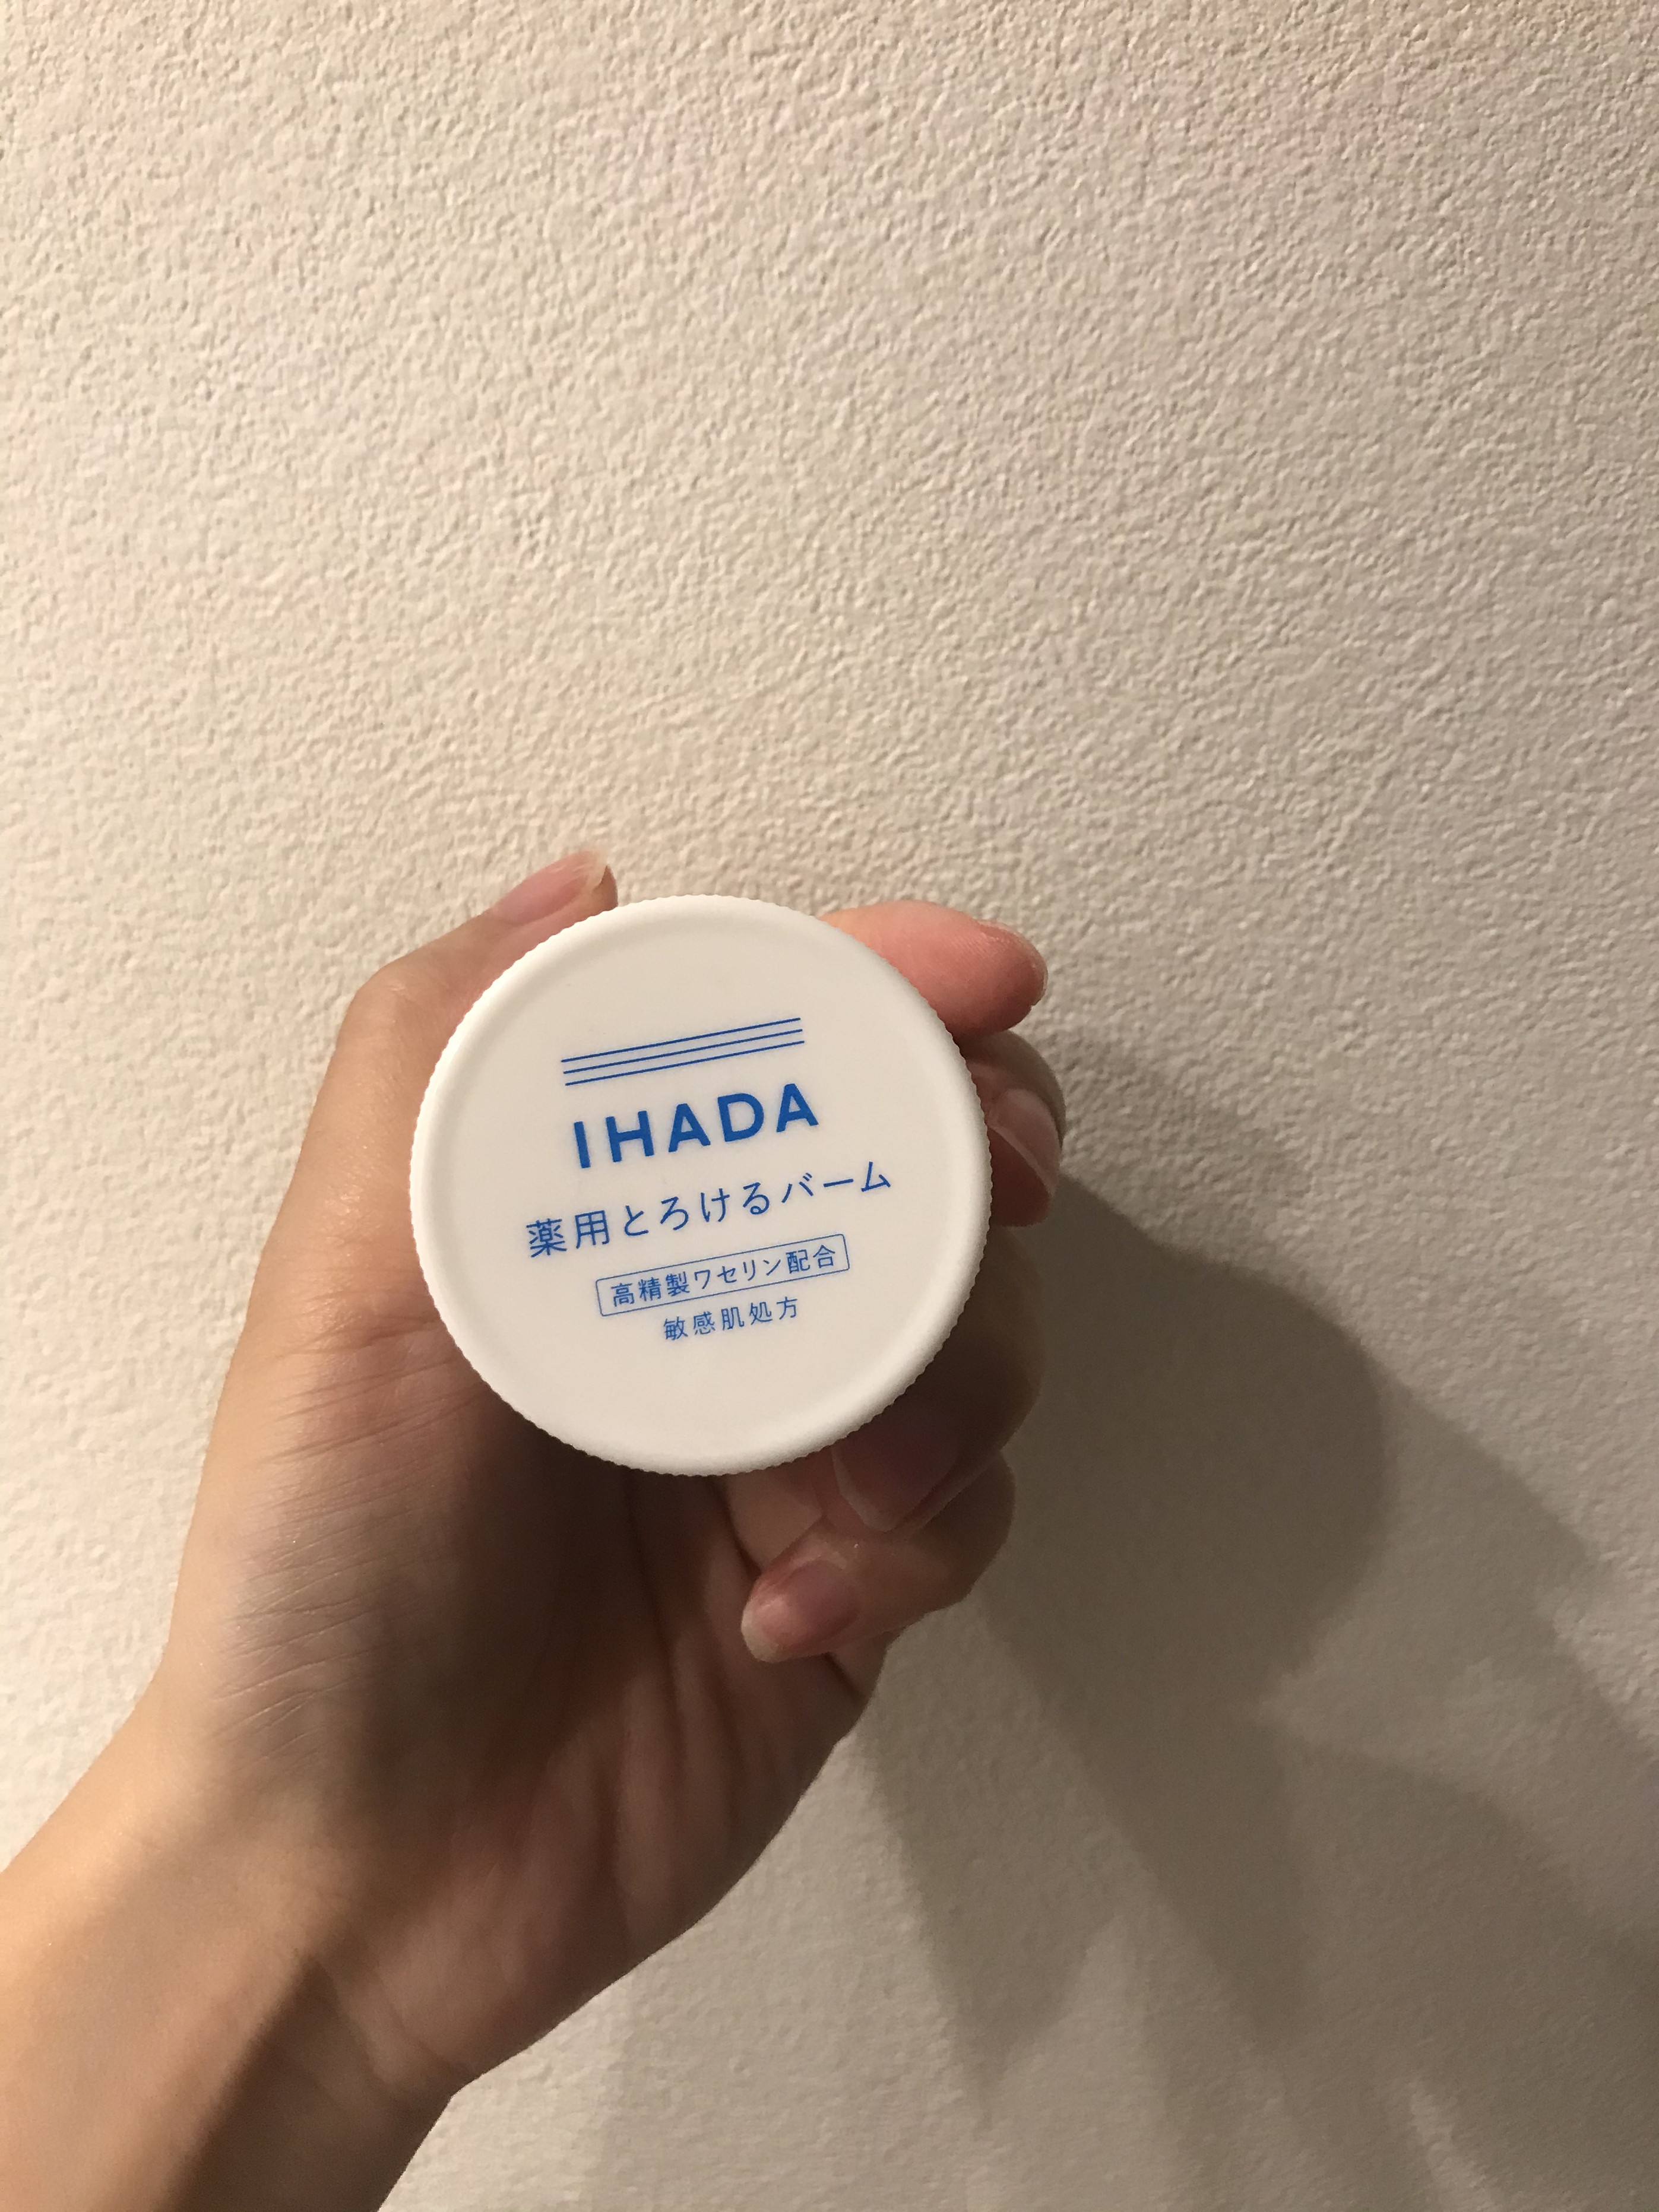 IHADA(イハダ) 薬用バームの良い点・メリットに関するemikaさんの口コミ画像1